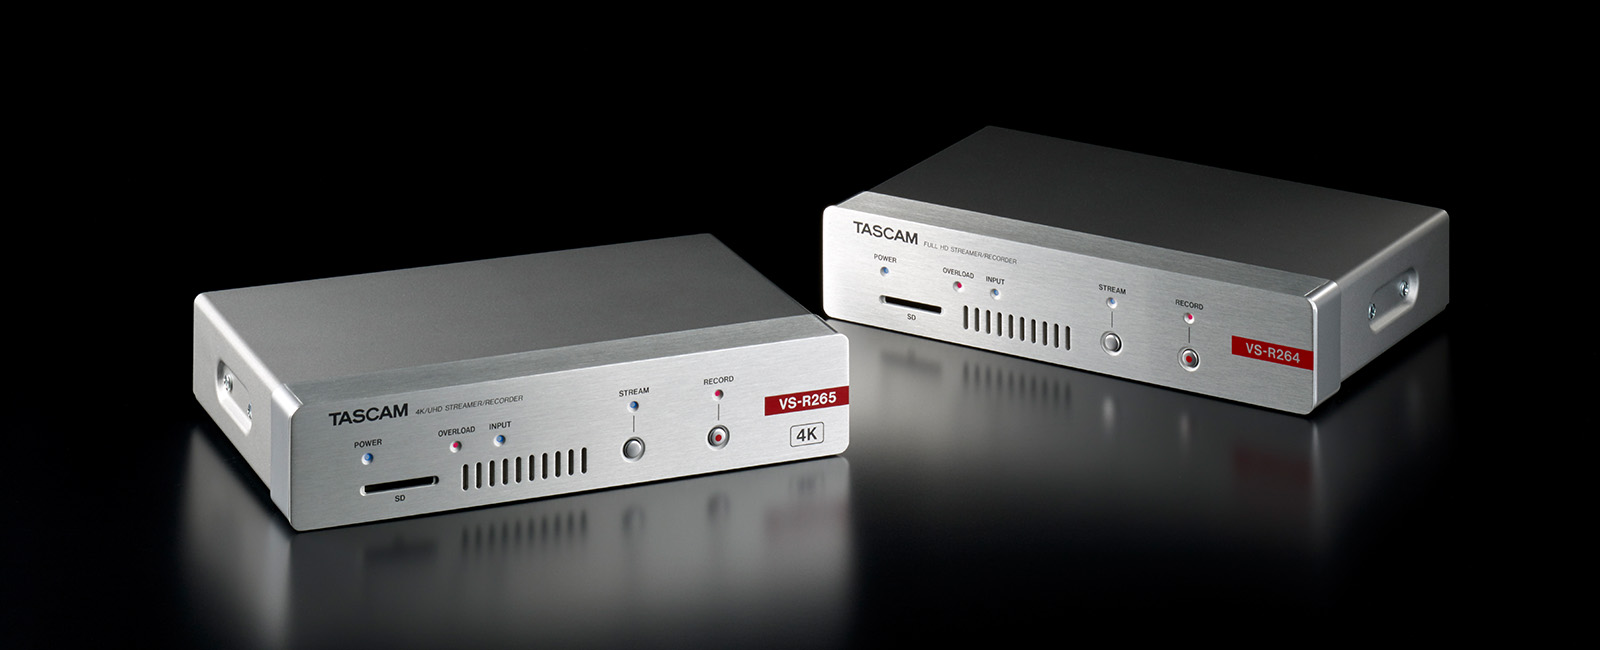 TASCAM Announces V2.0 Firmware Update for the VS-R264 / VS-R265 Video Streamers / Recorders